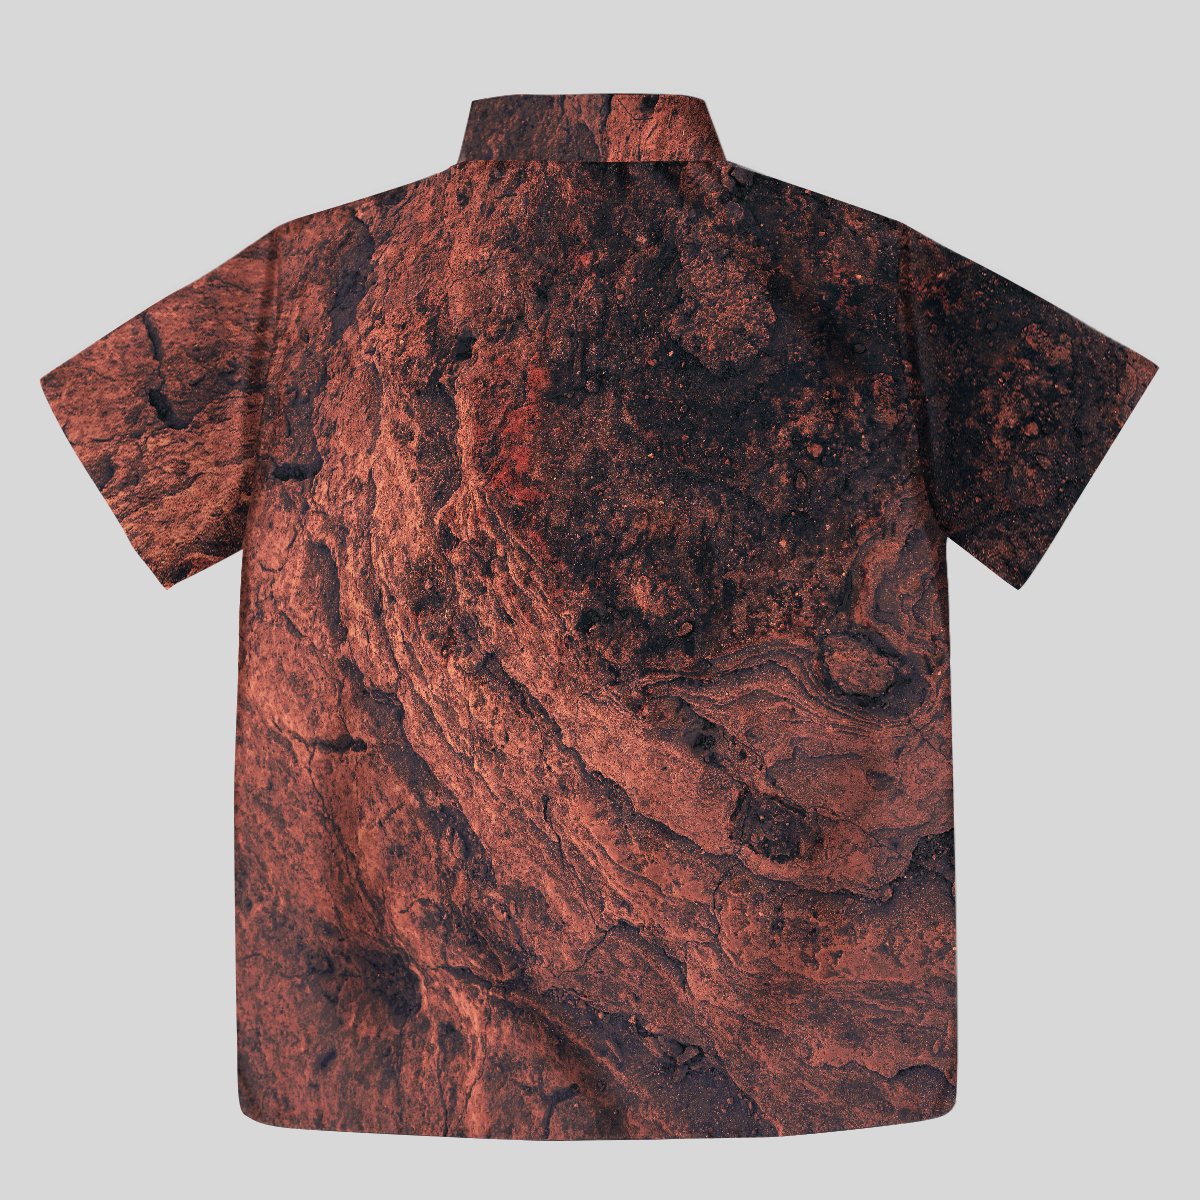 Mars Surface Button Up Pocket Shirt - Geeksoutfit